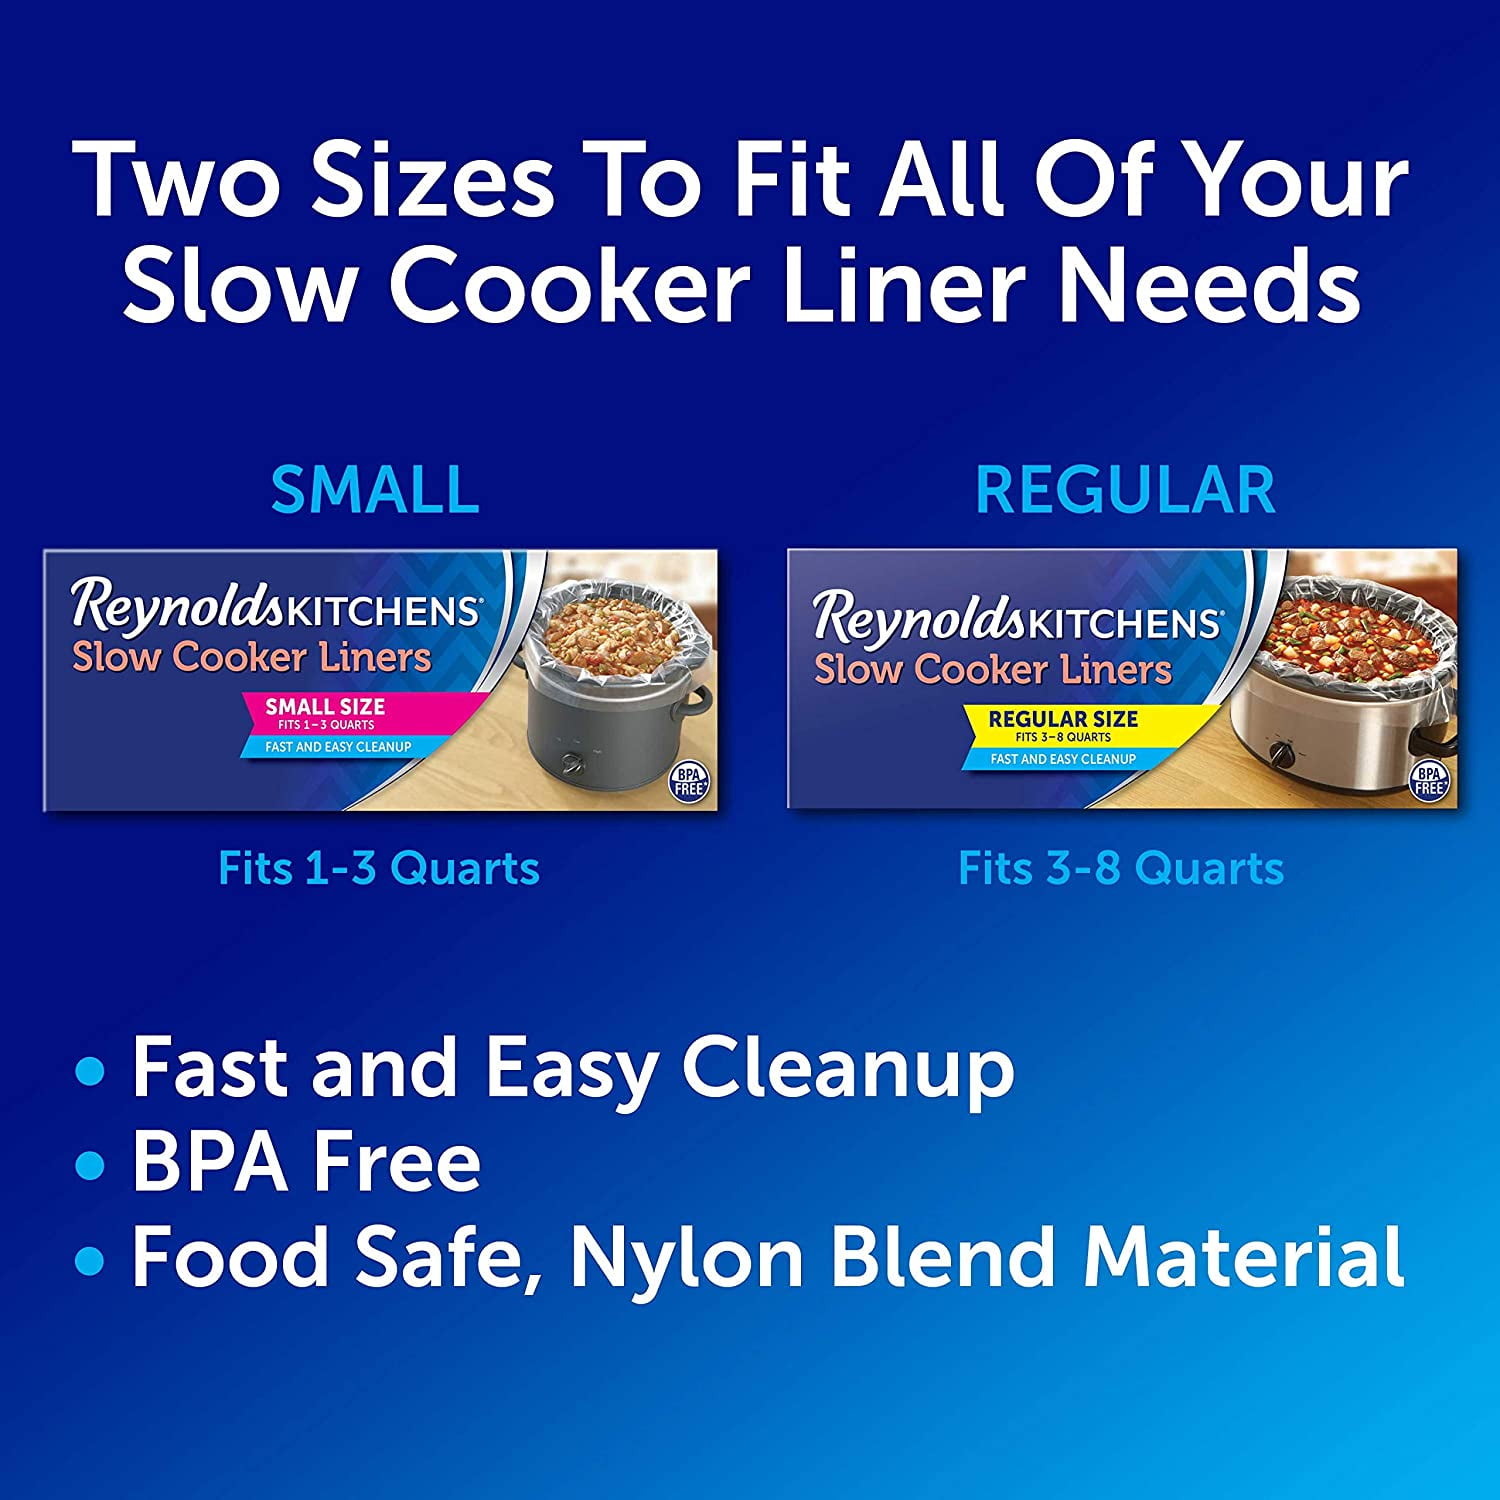 Reynolds Wrap Kitchens Slow Cooker Liners, Regular, Fits 3-8 Quarts, 8  Count NIB